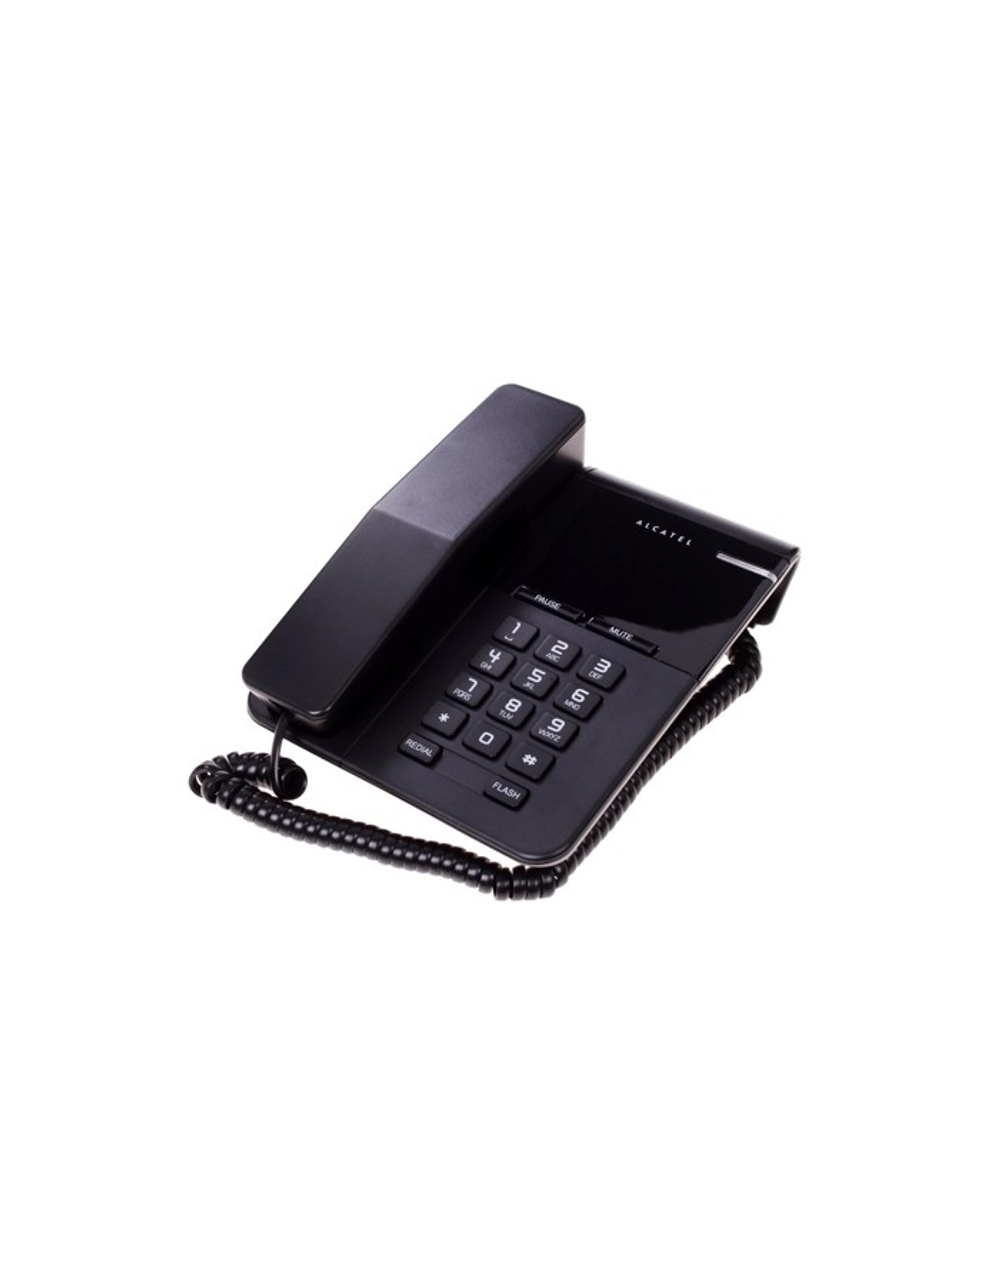 ALCATEL T22 black Телефон [ATL1408393]